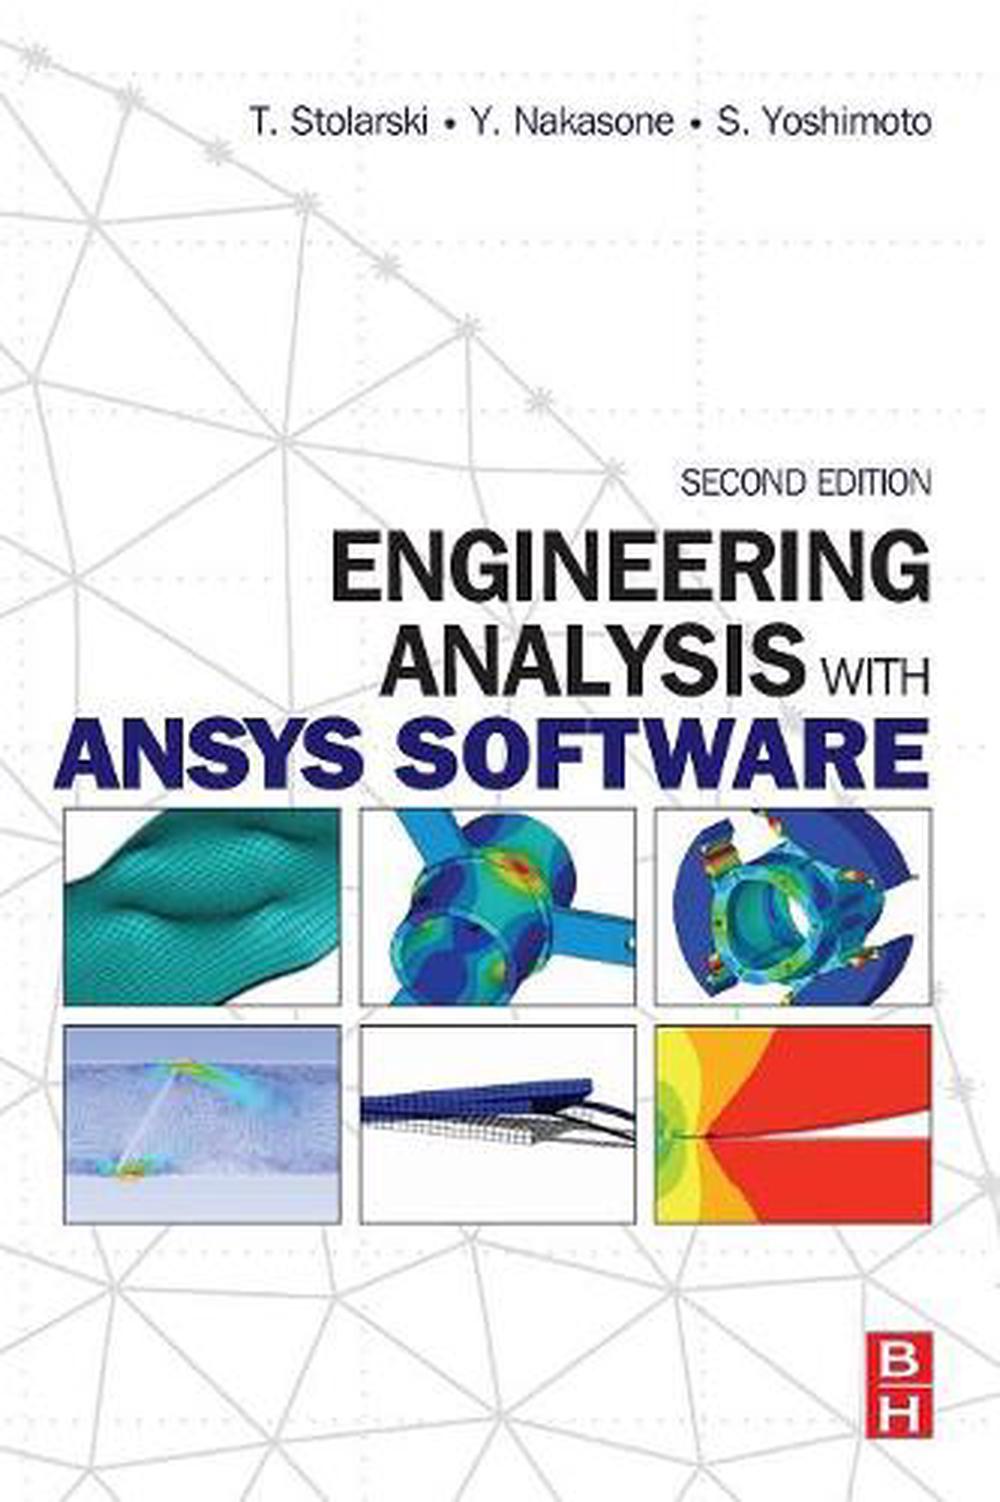 analysis model in software engineering